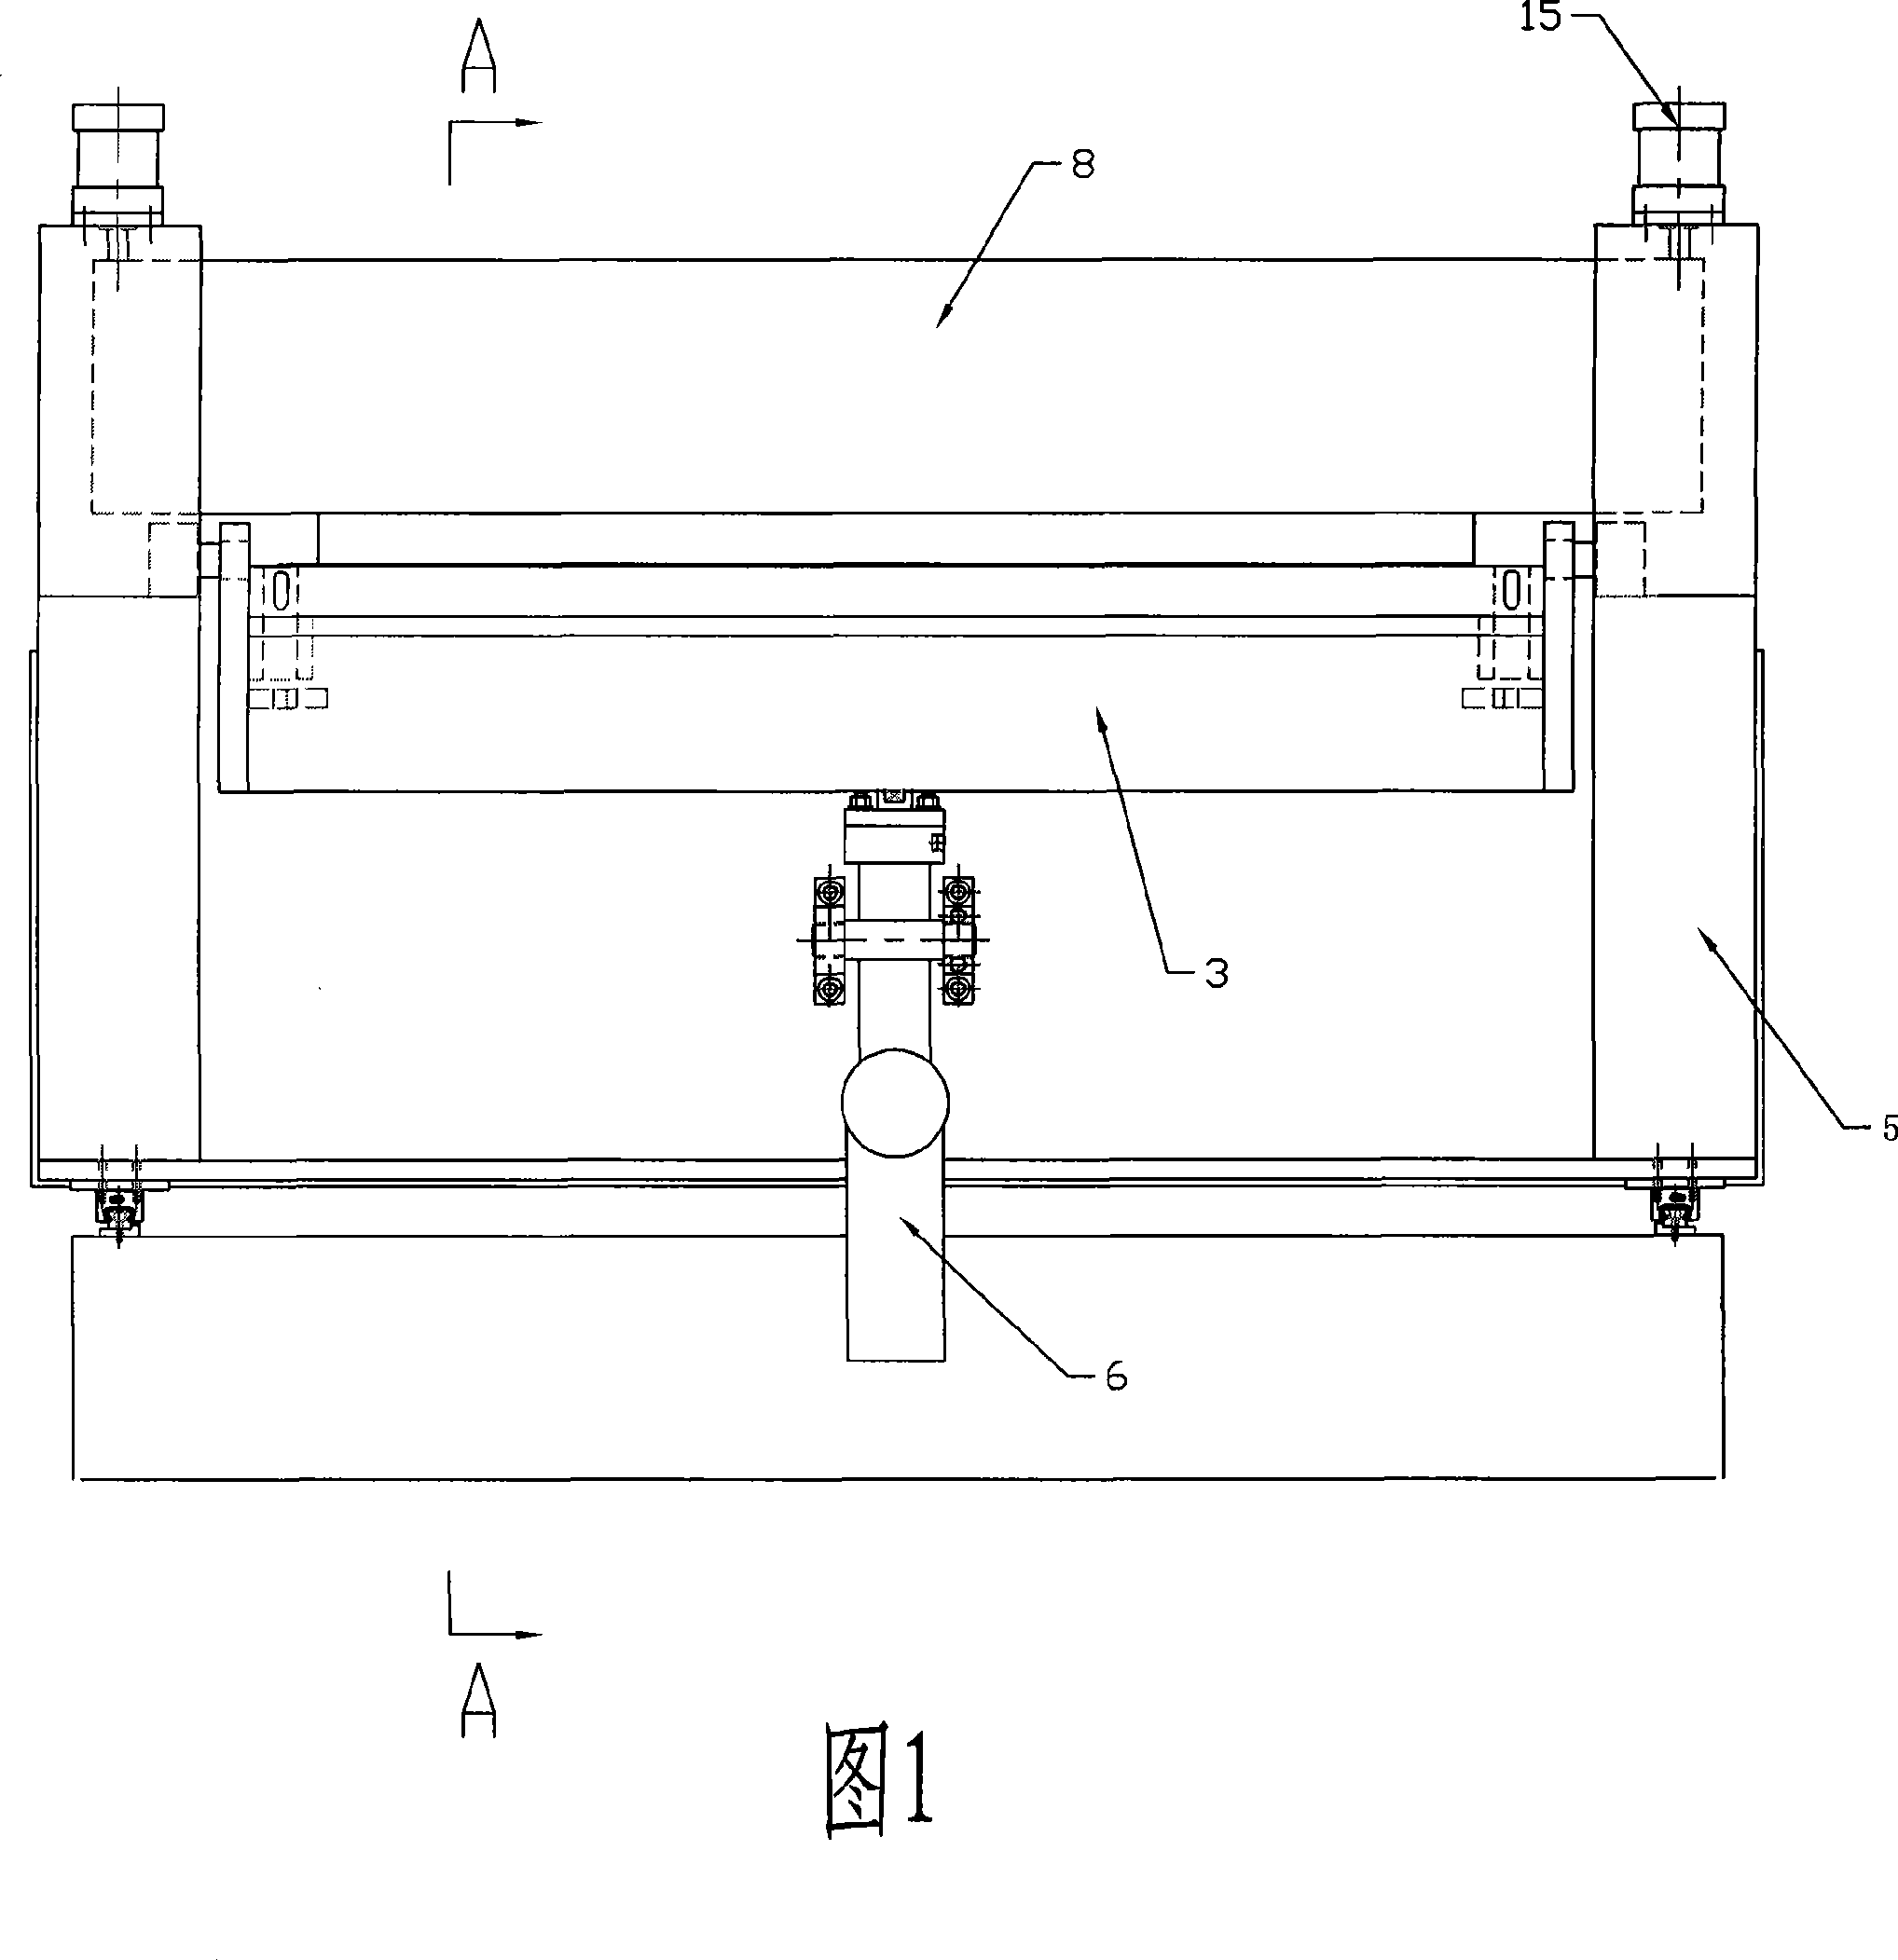 Bending and molding machine for metal sheet member